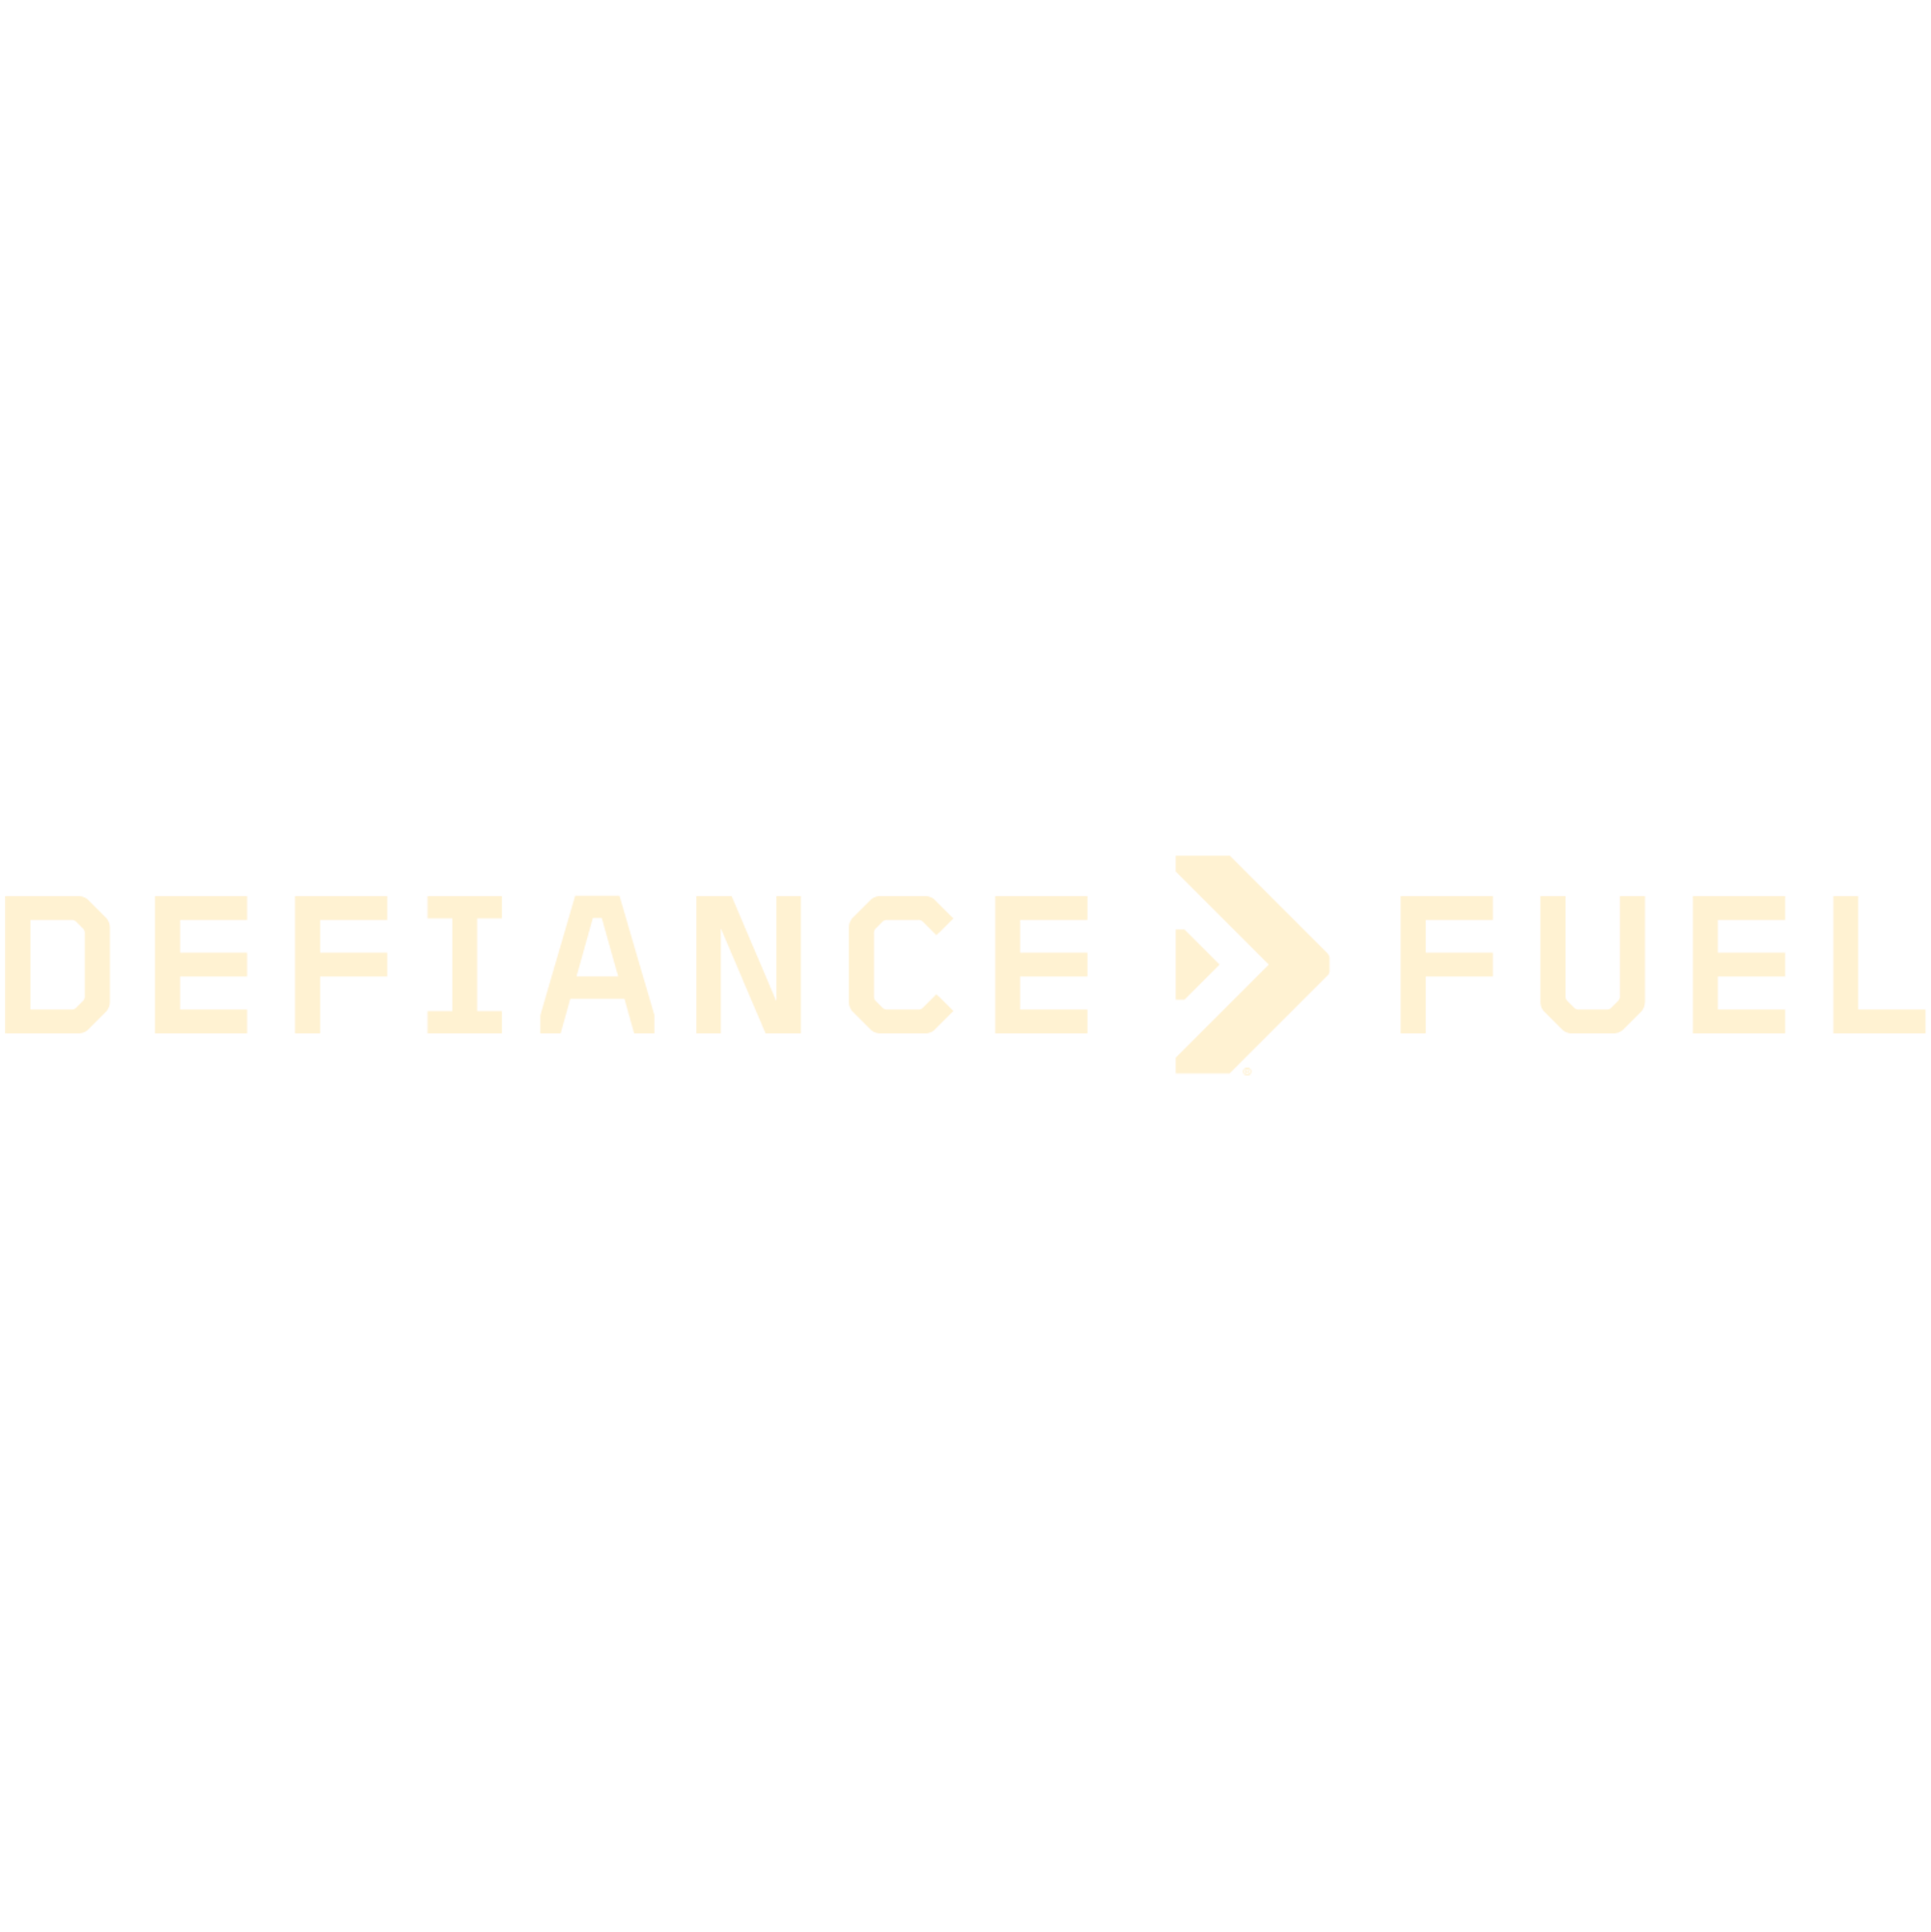 Defiance logo tan